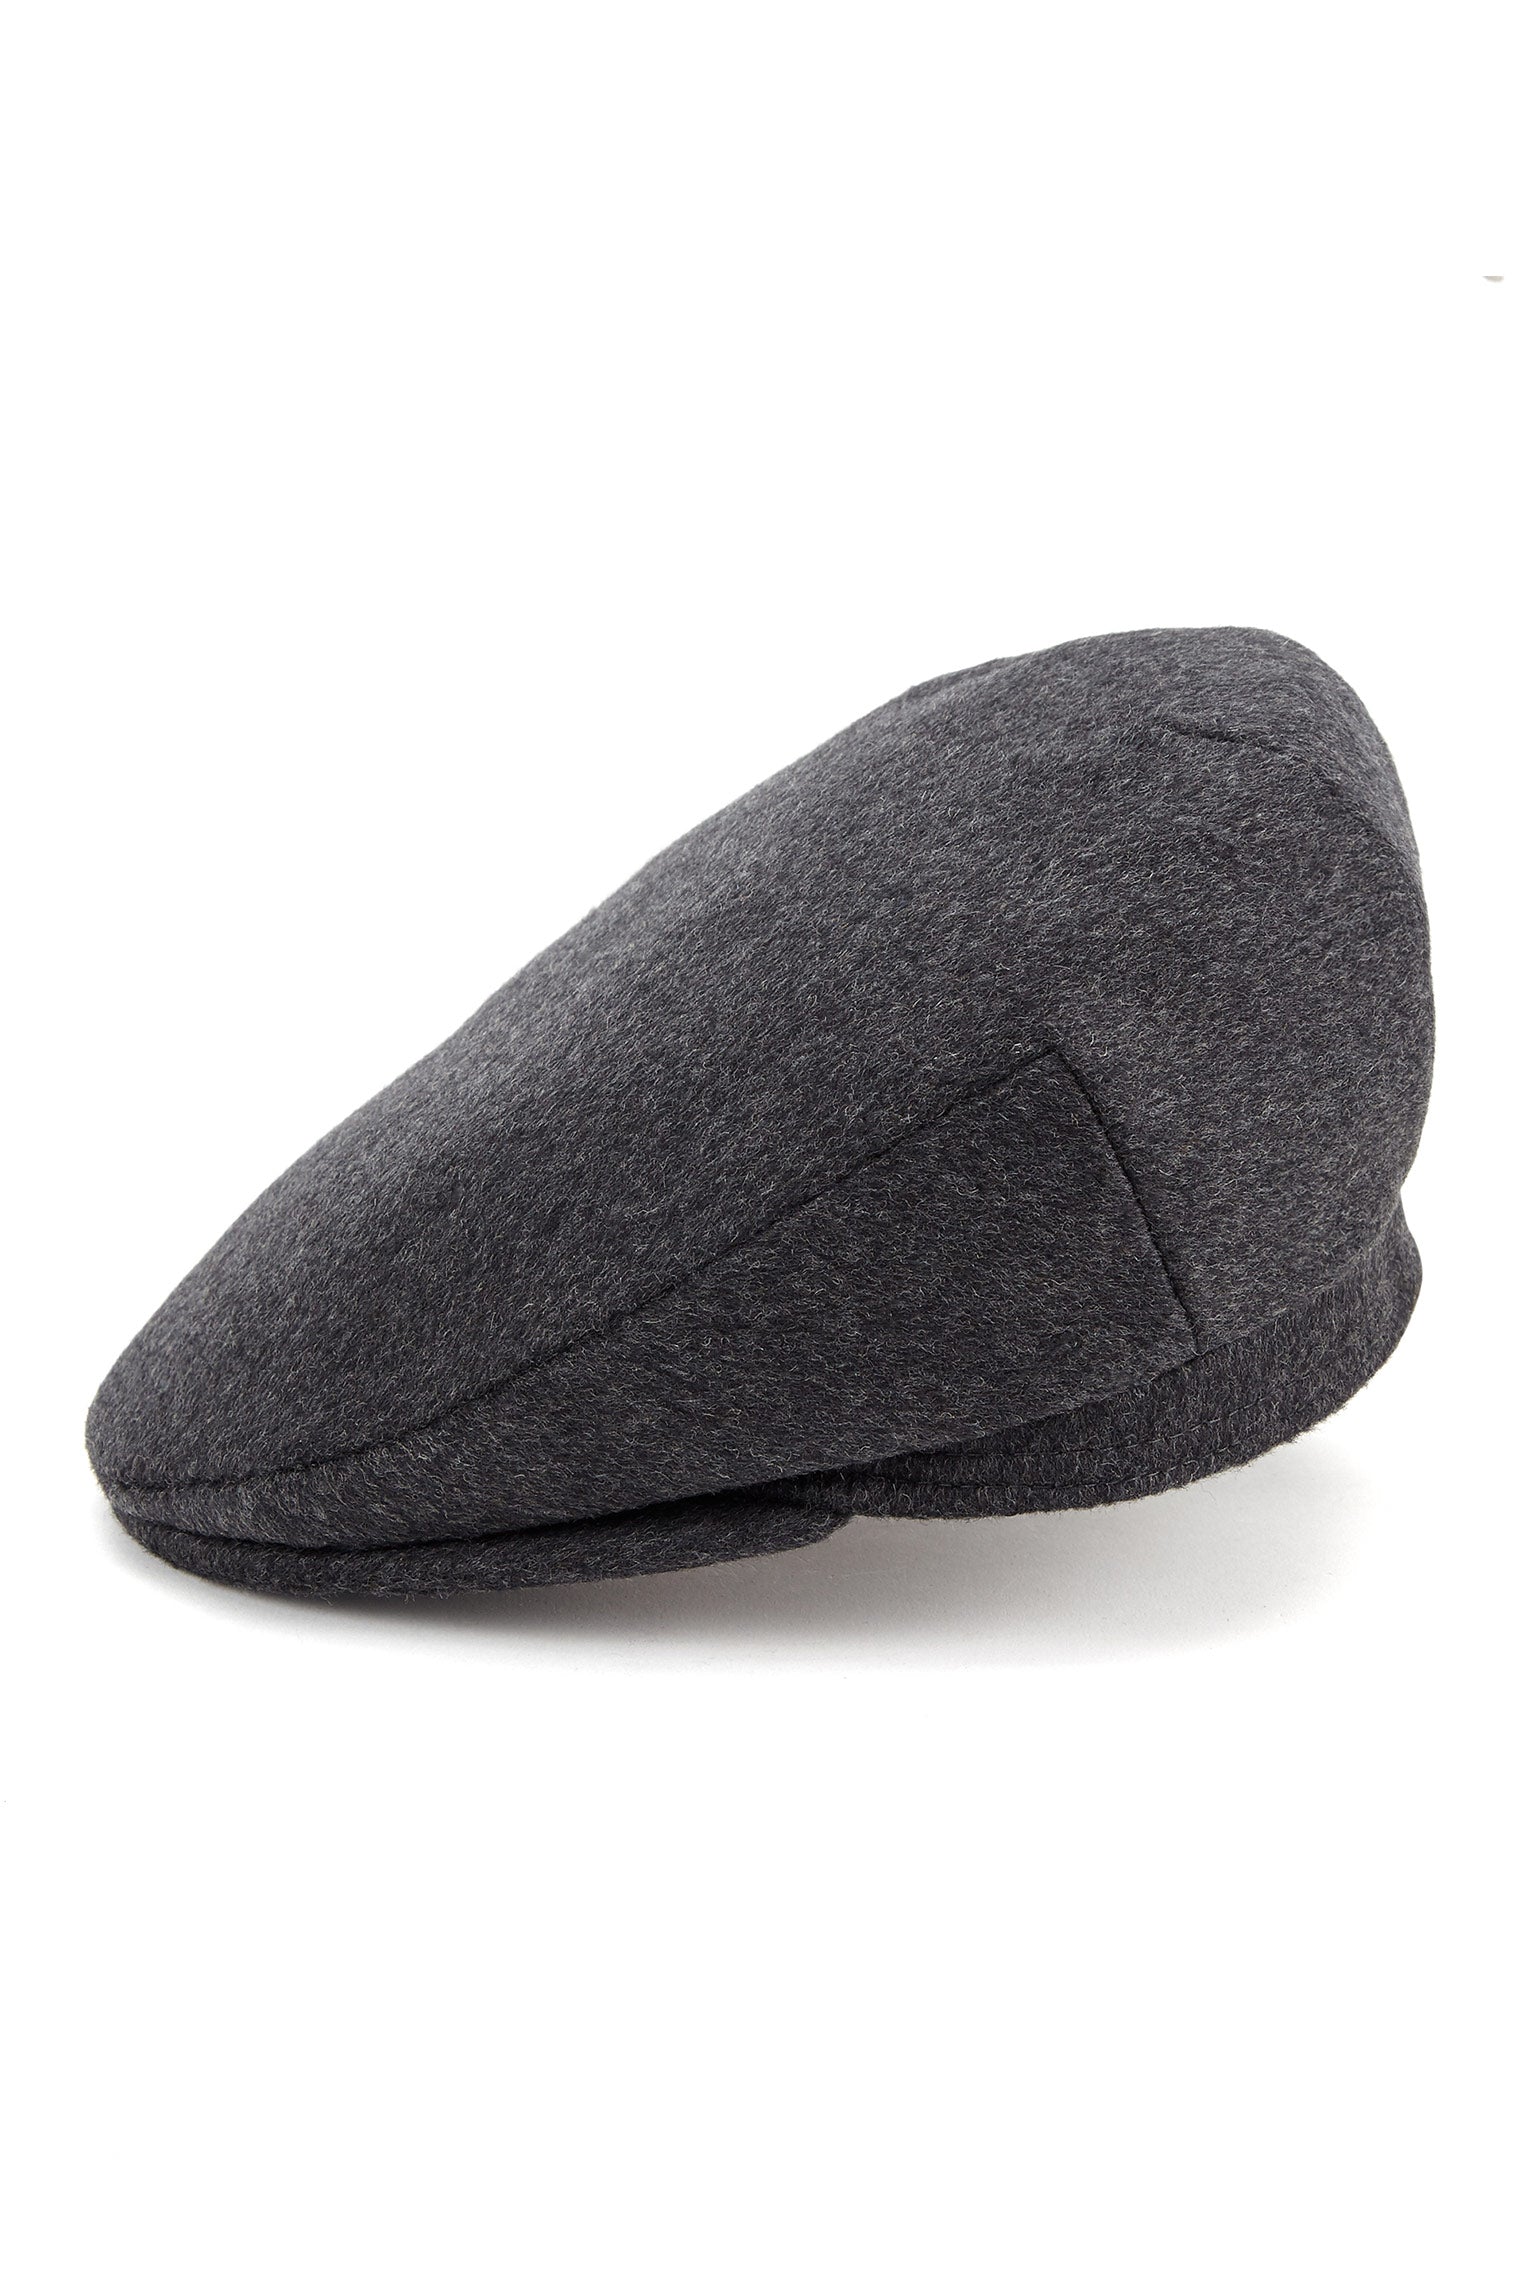 Oslo Tweed Flat Cap - Hats for Tall People - Lock & Co. Hatters London UK